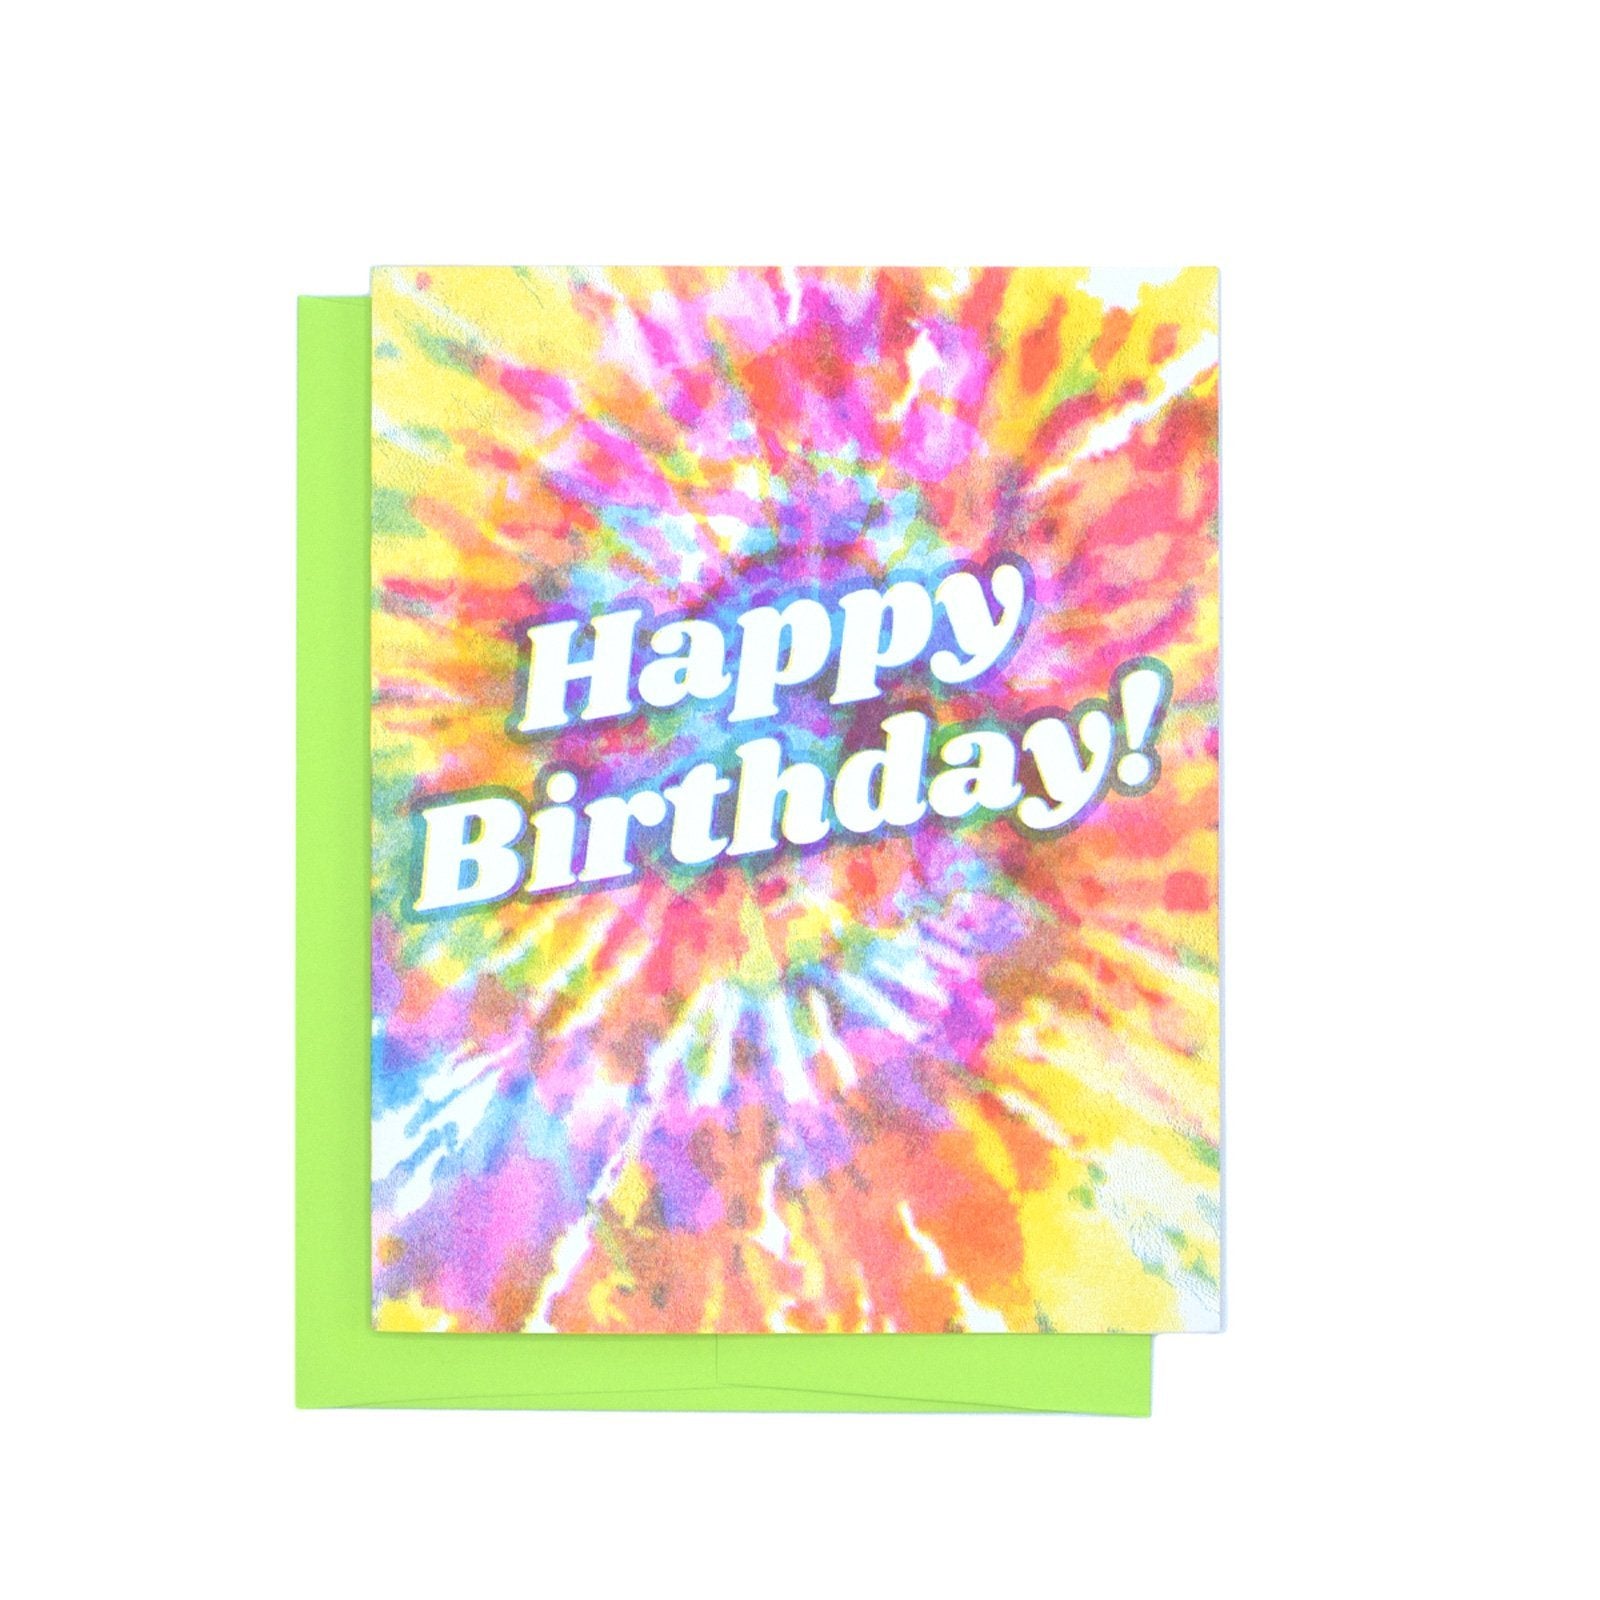 Bright Rainbow Tie Dye Greeting Card by Green Splash